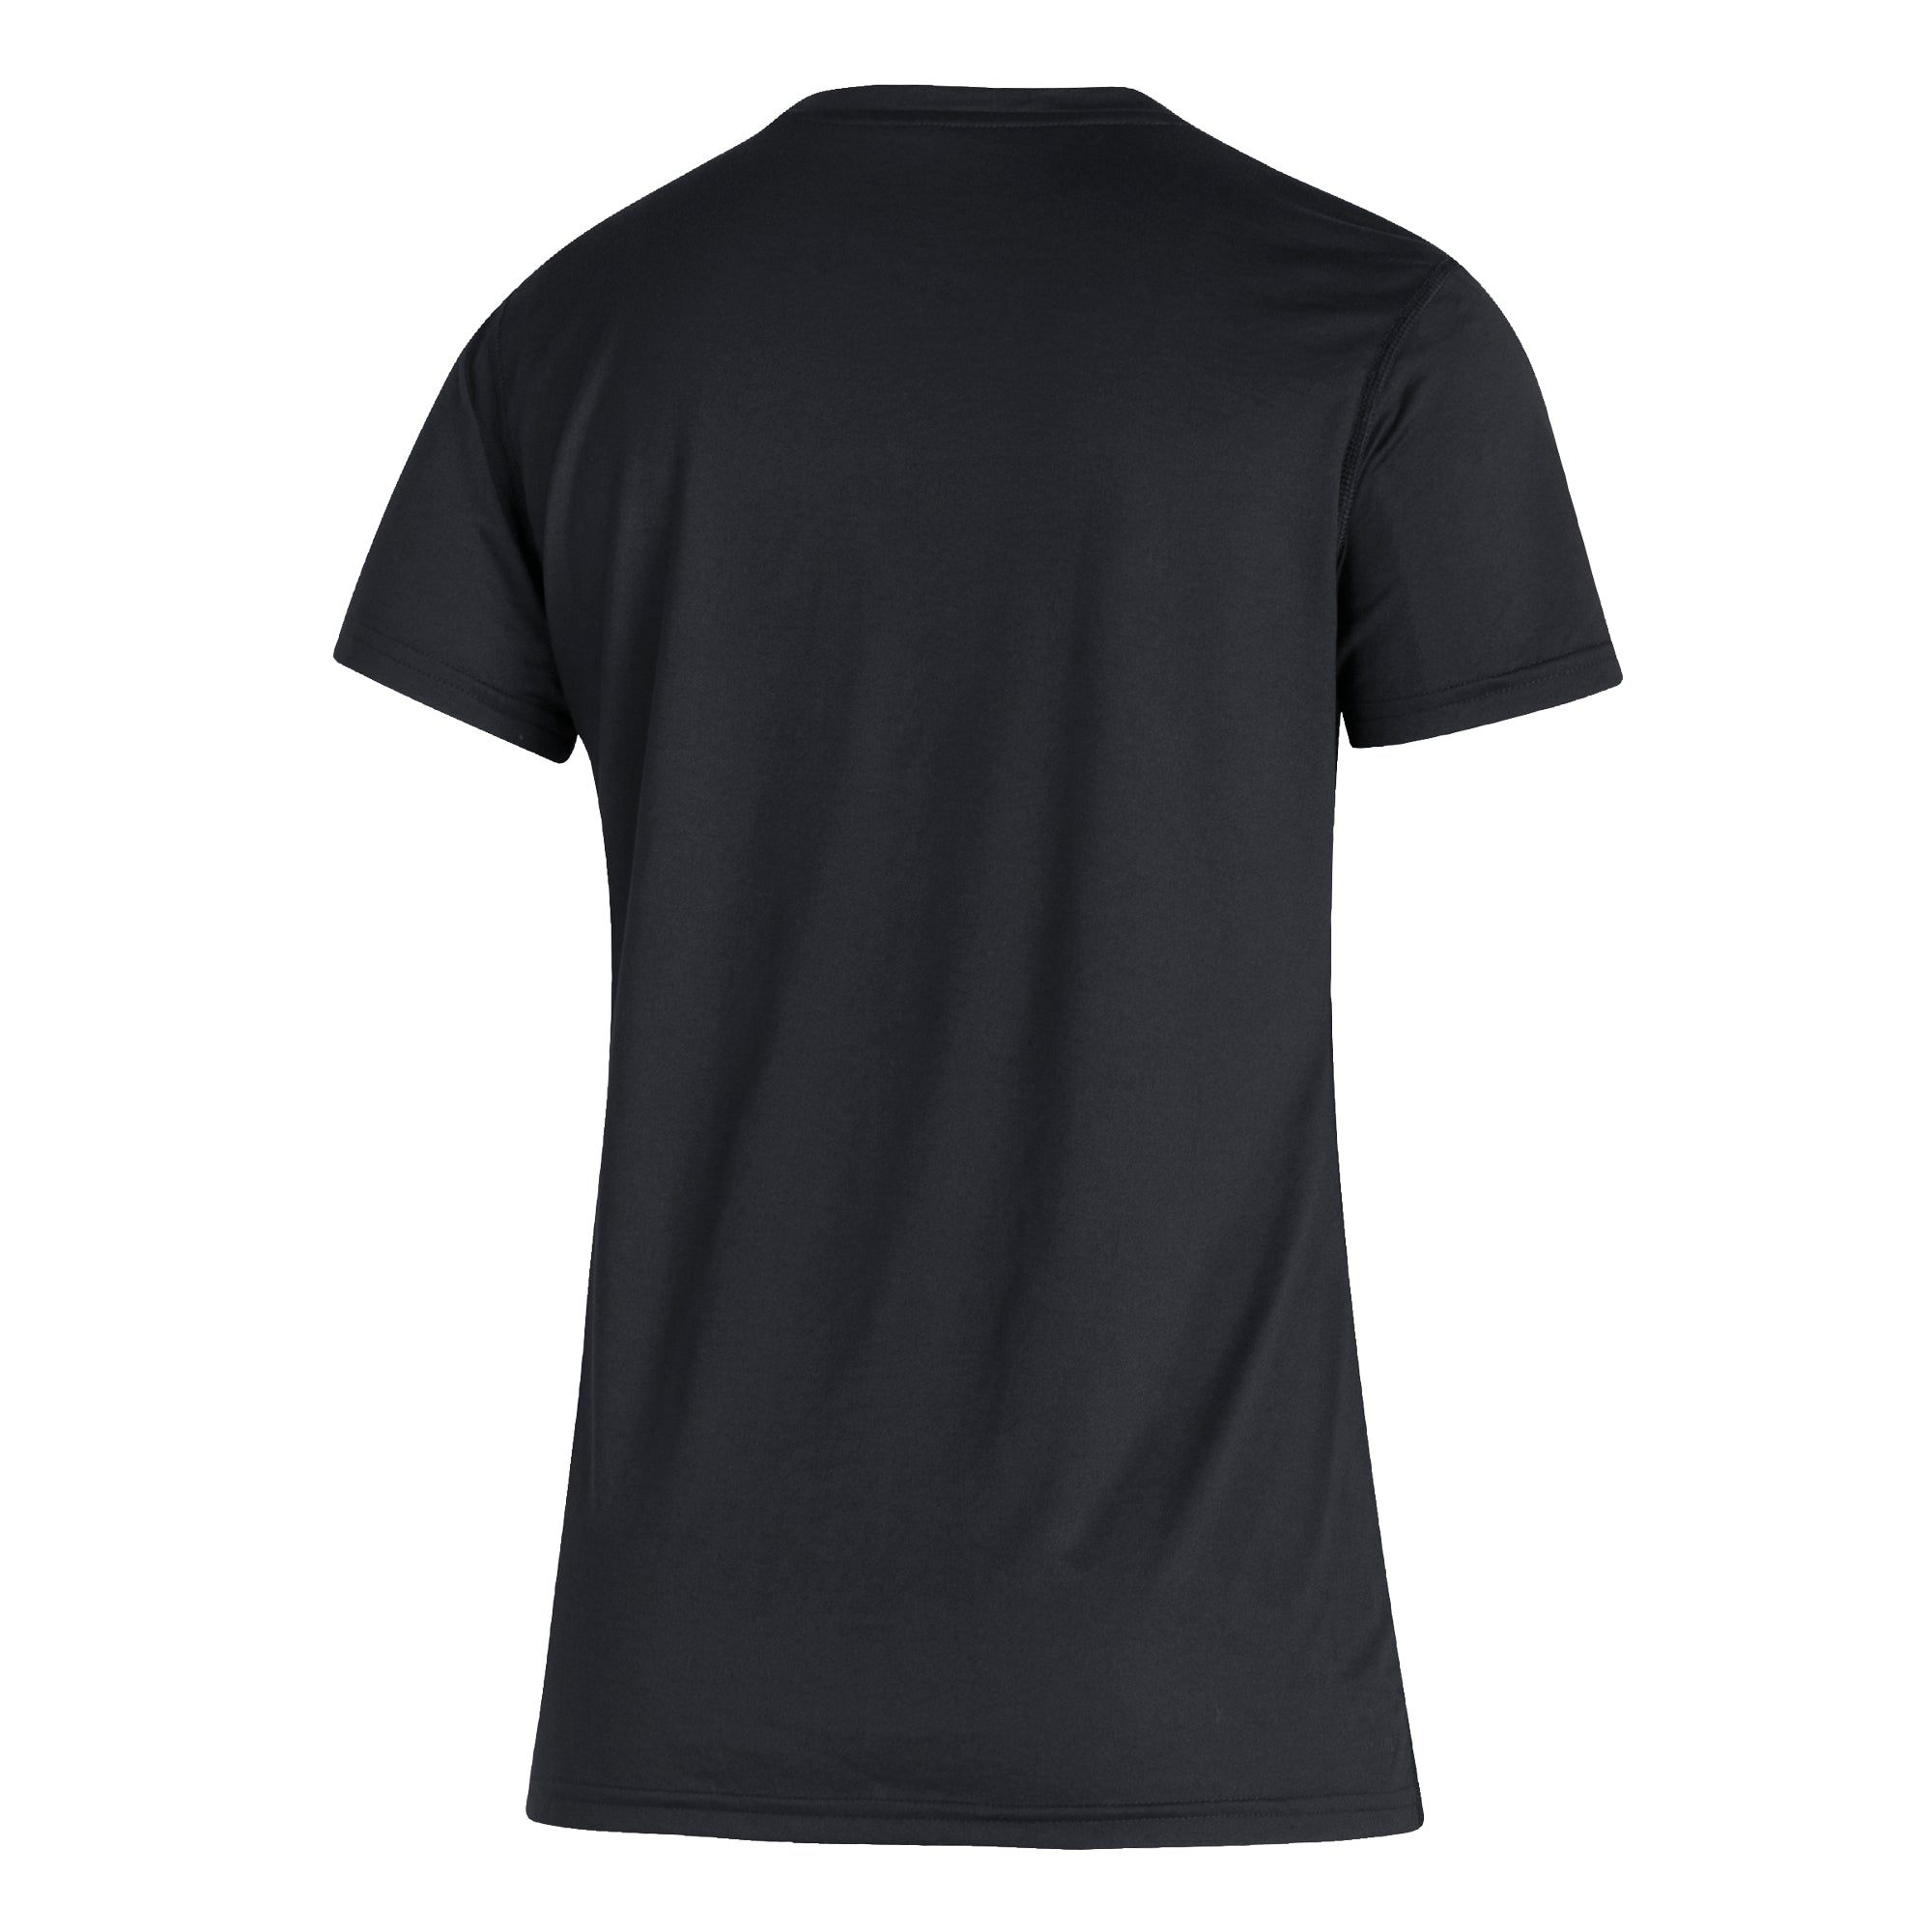 Inter Miami CF 2022 adidas Womens Vintage Creator T-Shirt - Black